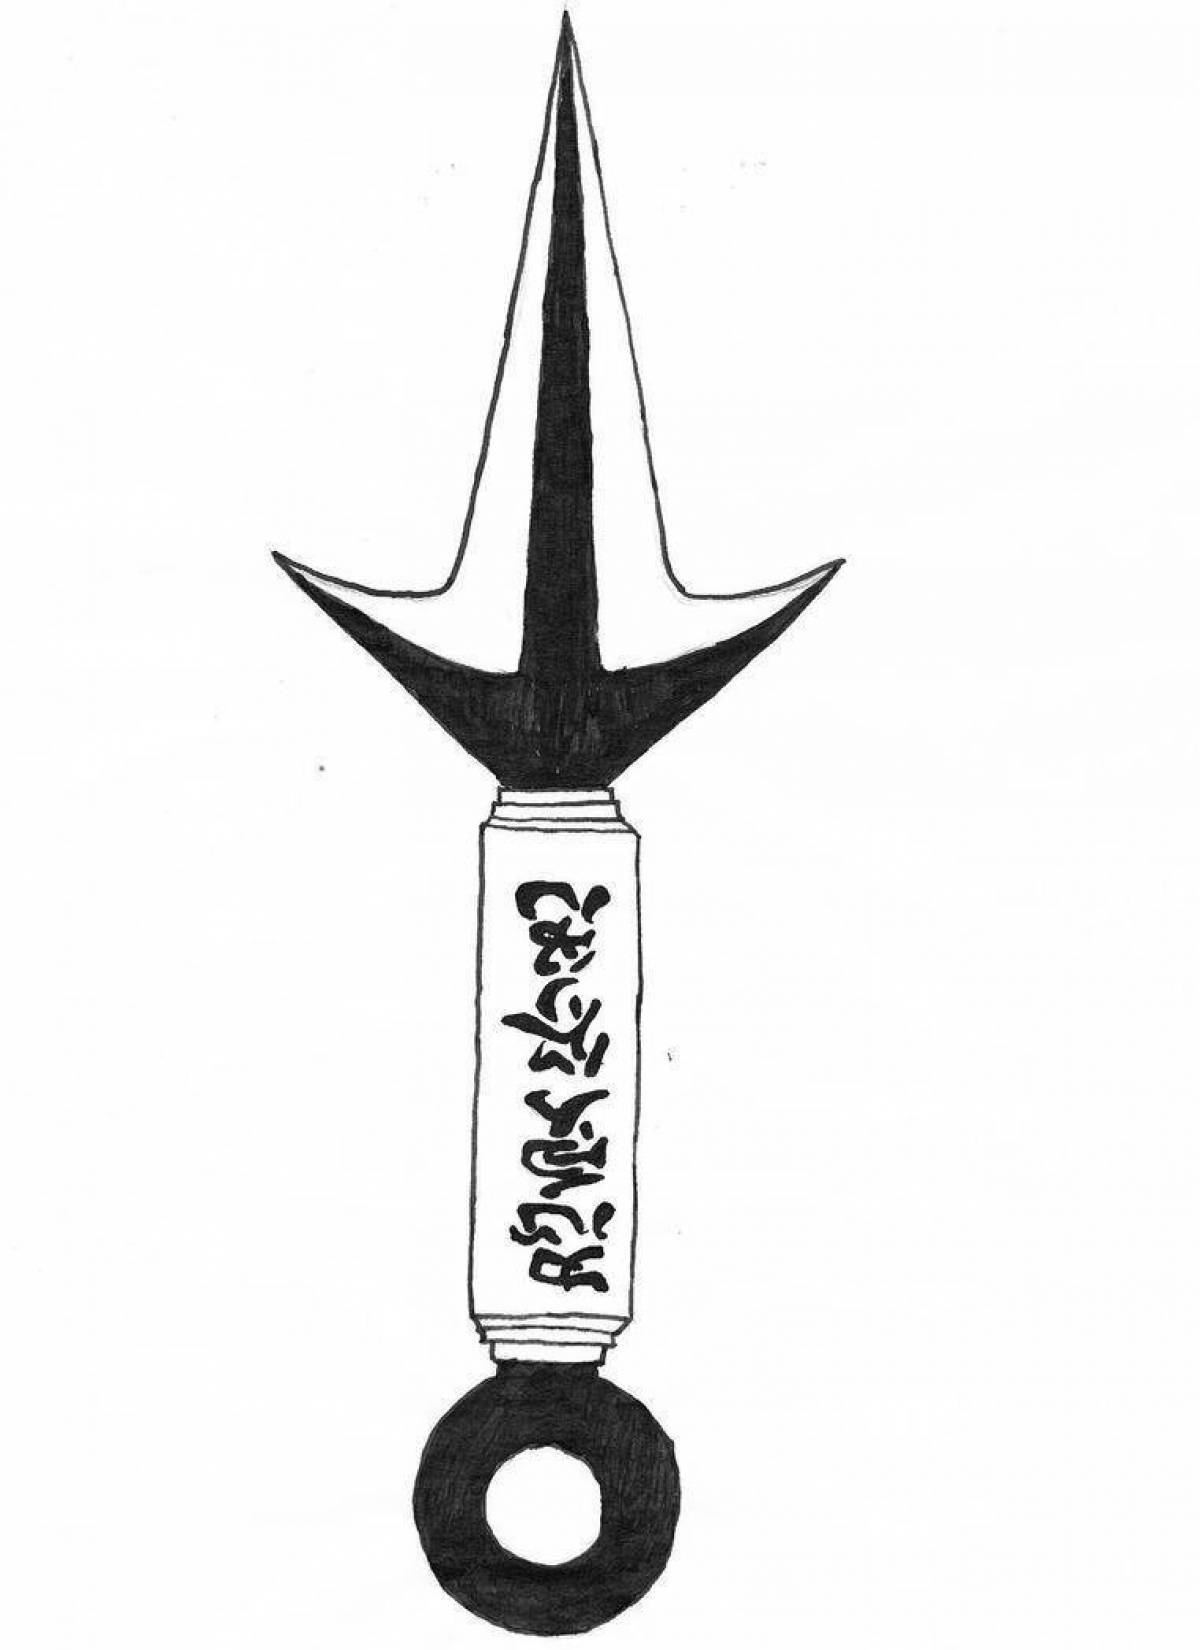 Dramatic coloring of the kunai knife